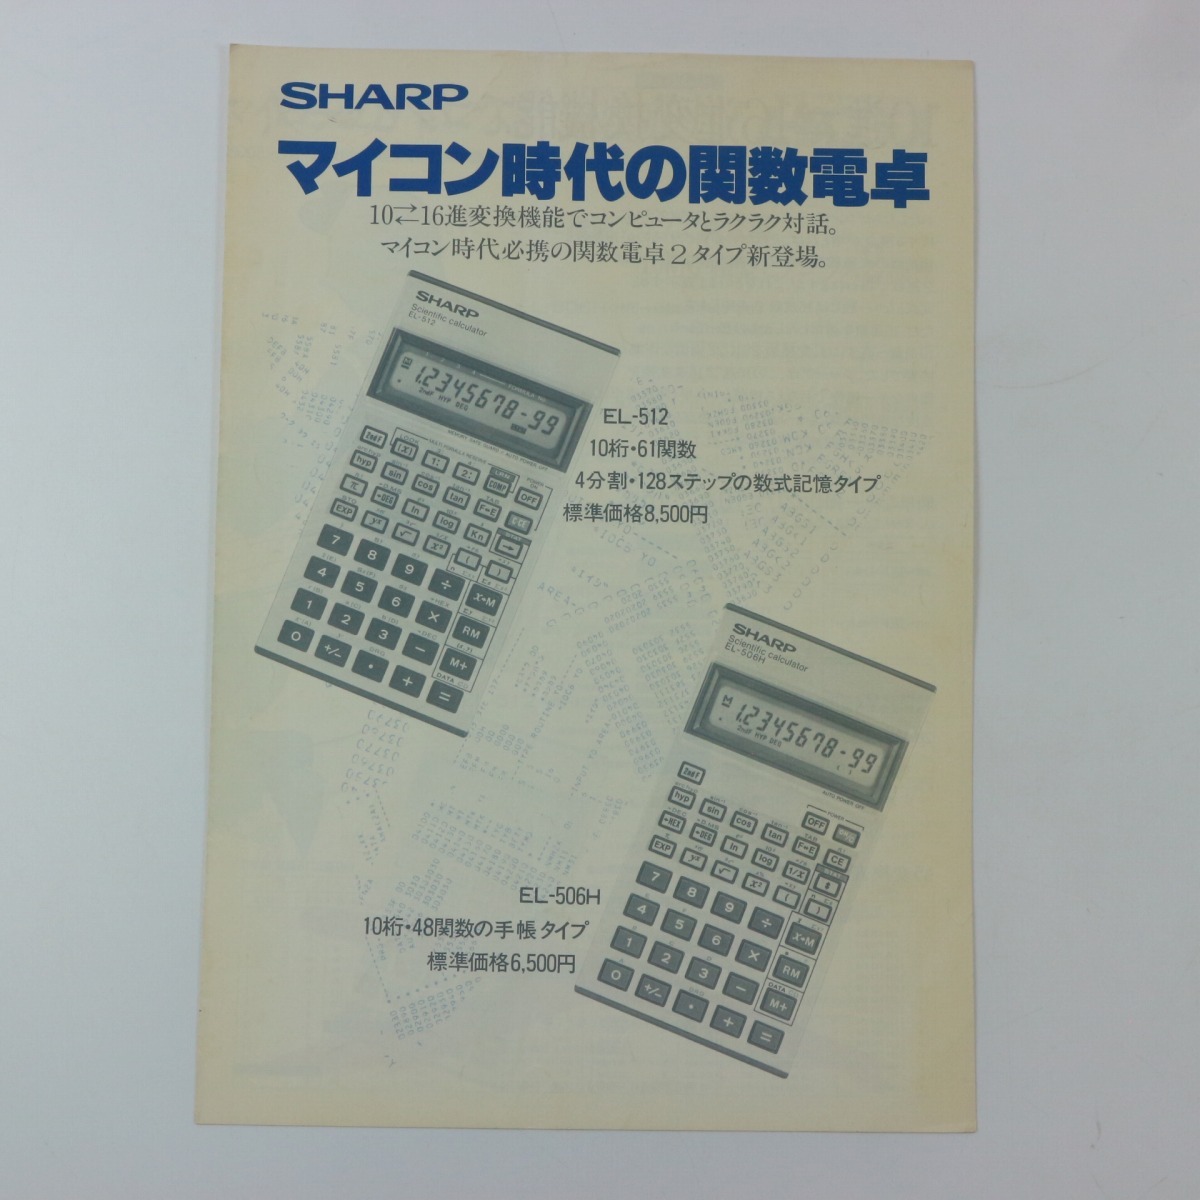 **SHARP sharp microcomputer era. scientific calculator catalog 1983 Showa era 58 year **